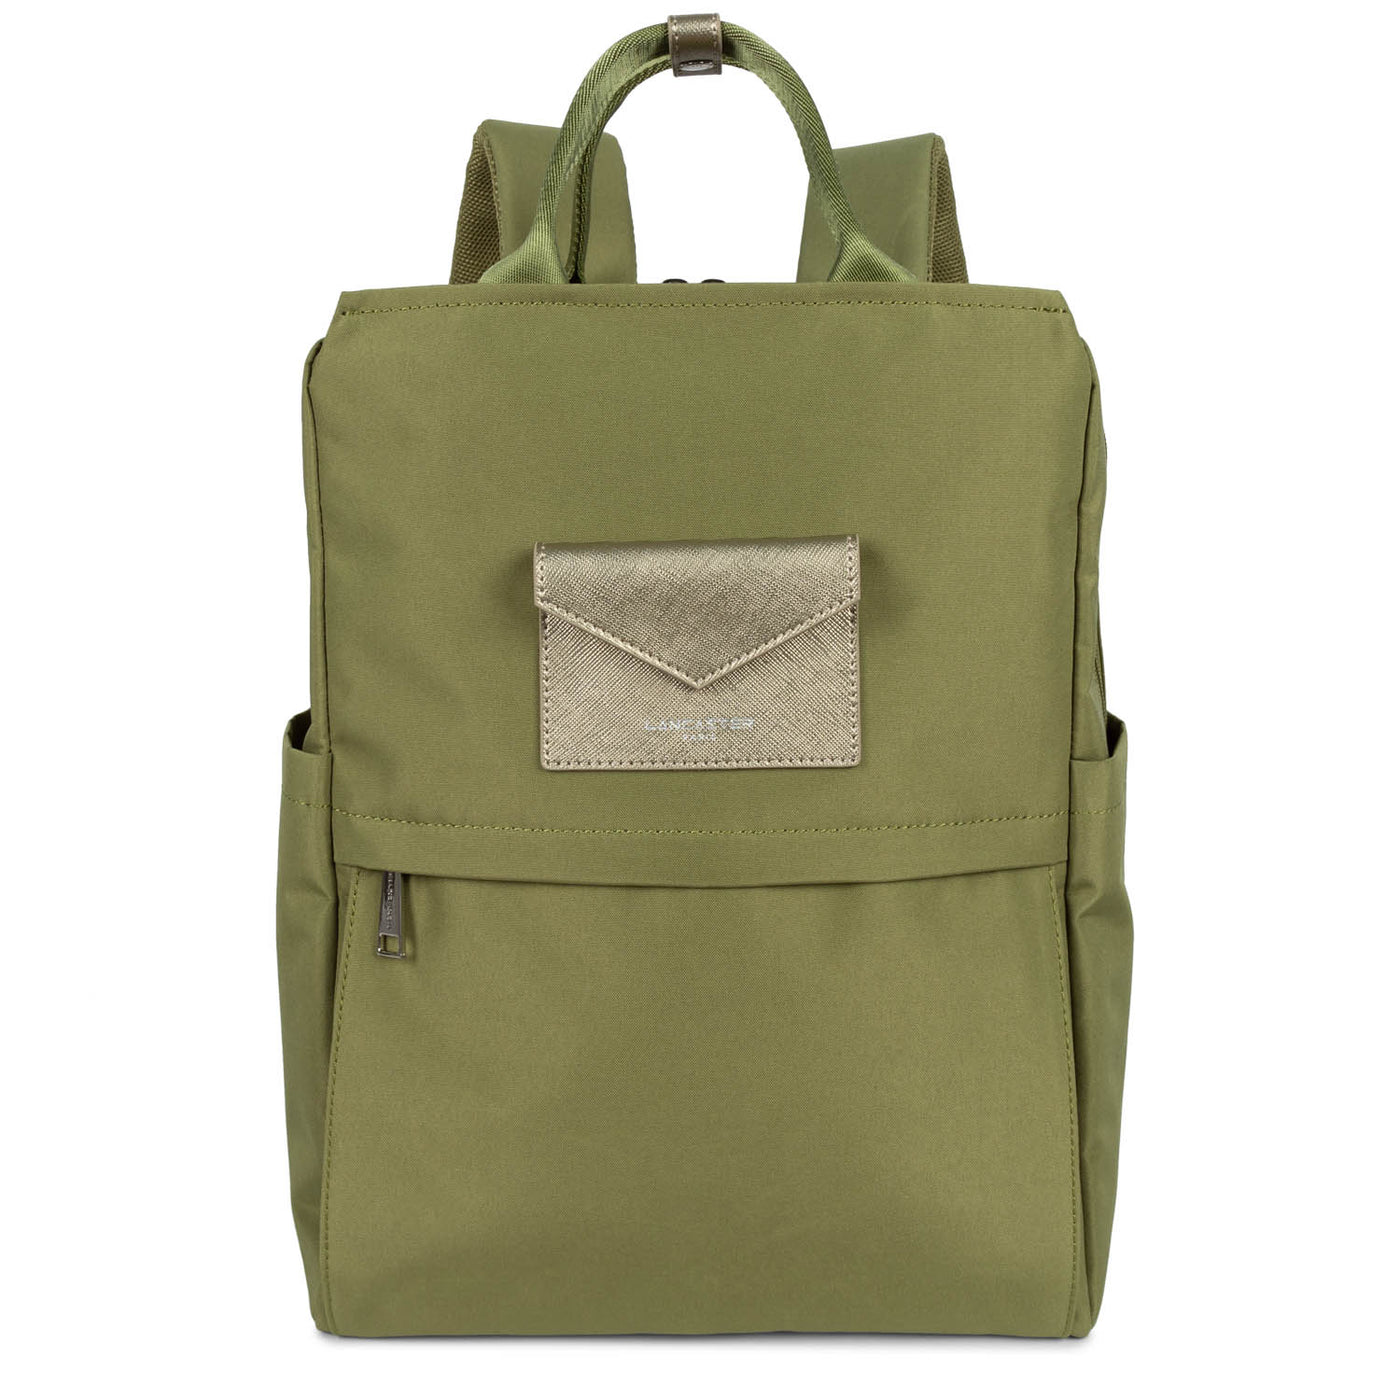 backpack - smart kba #couleur_bambou